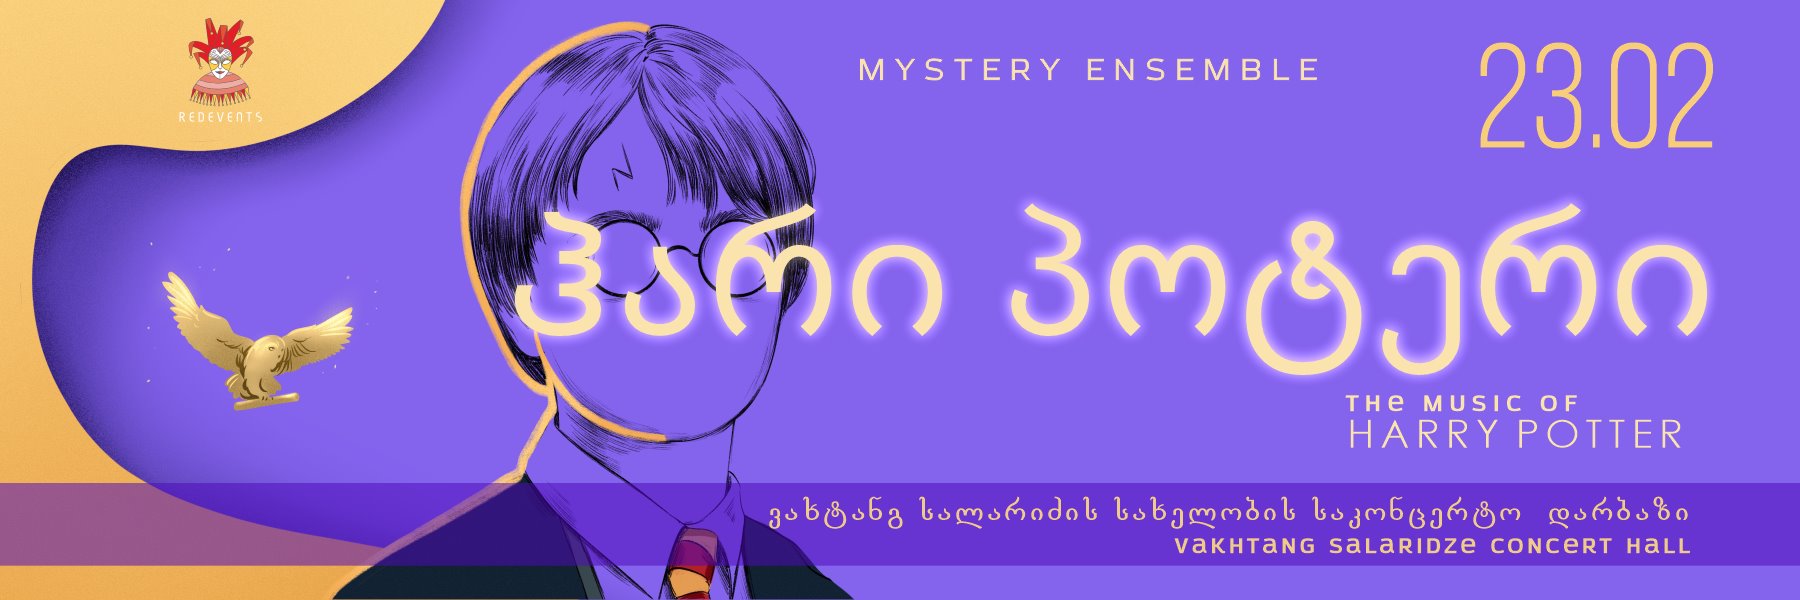 Hayao Miyazaki's Dreams by Mystery Ensemble — Red Events